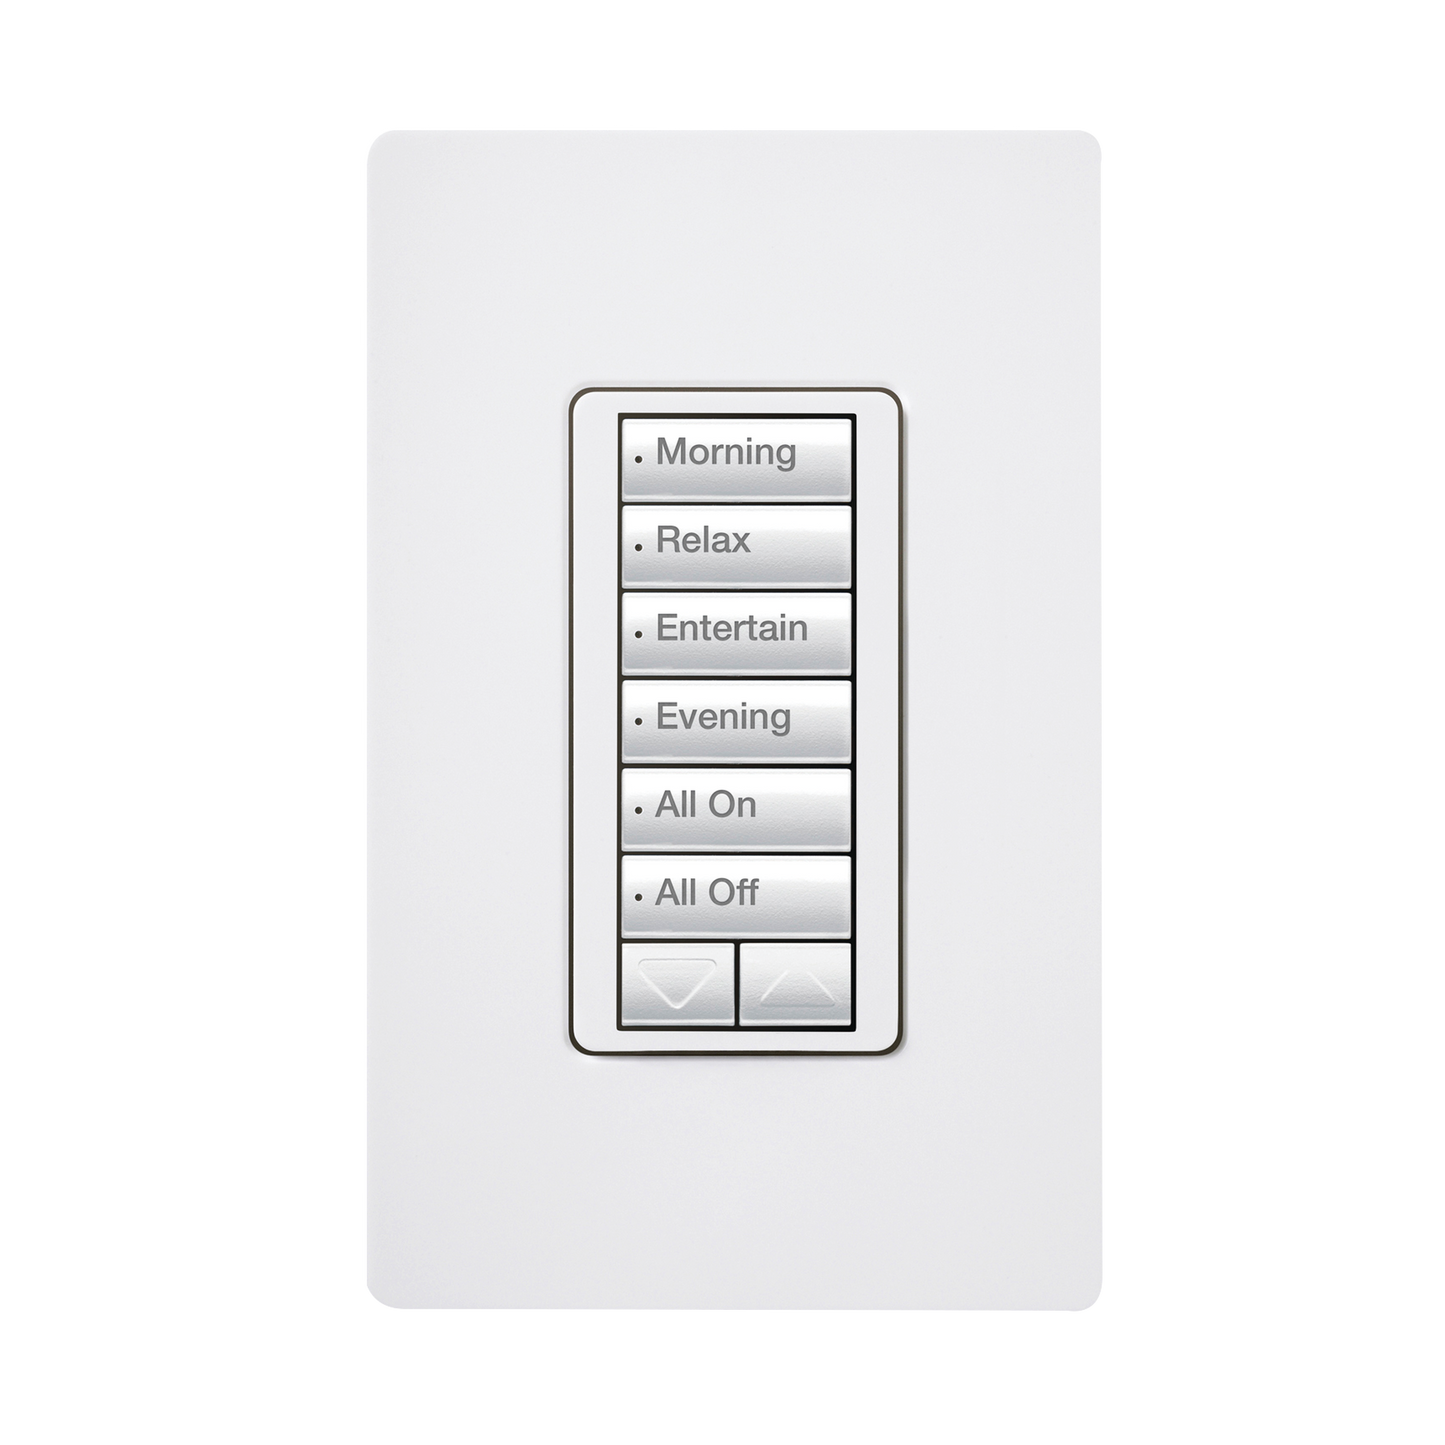 Teclado seetouch 6 botones, 2 botones subir/bajar, programe escenas diferentes en cada botón.